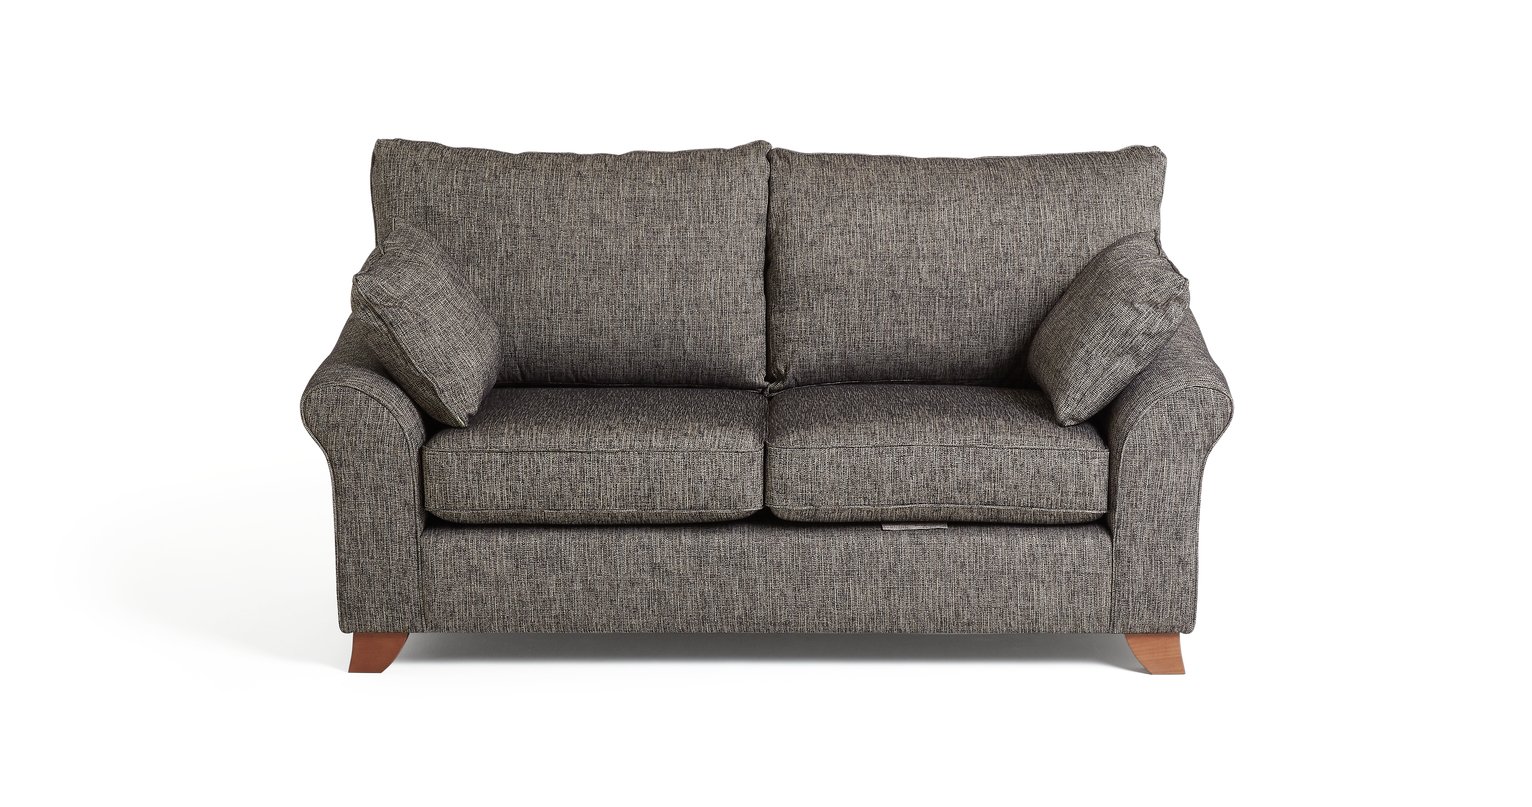 Habitat Gracie 3 Seater Fabric Sofa - Charcoal